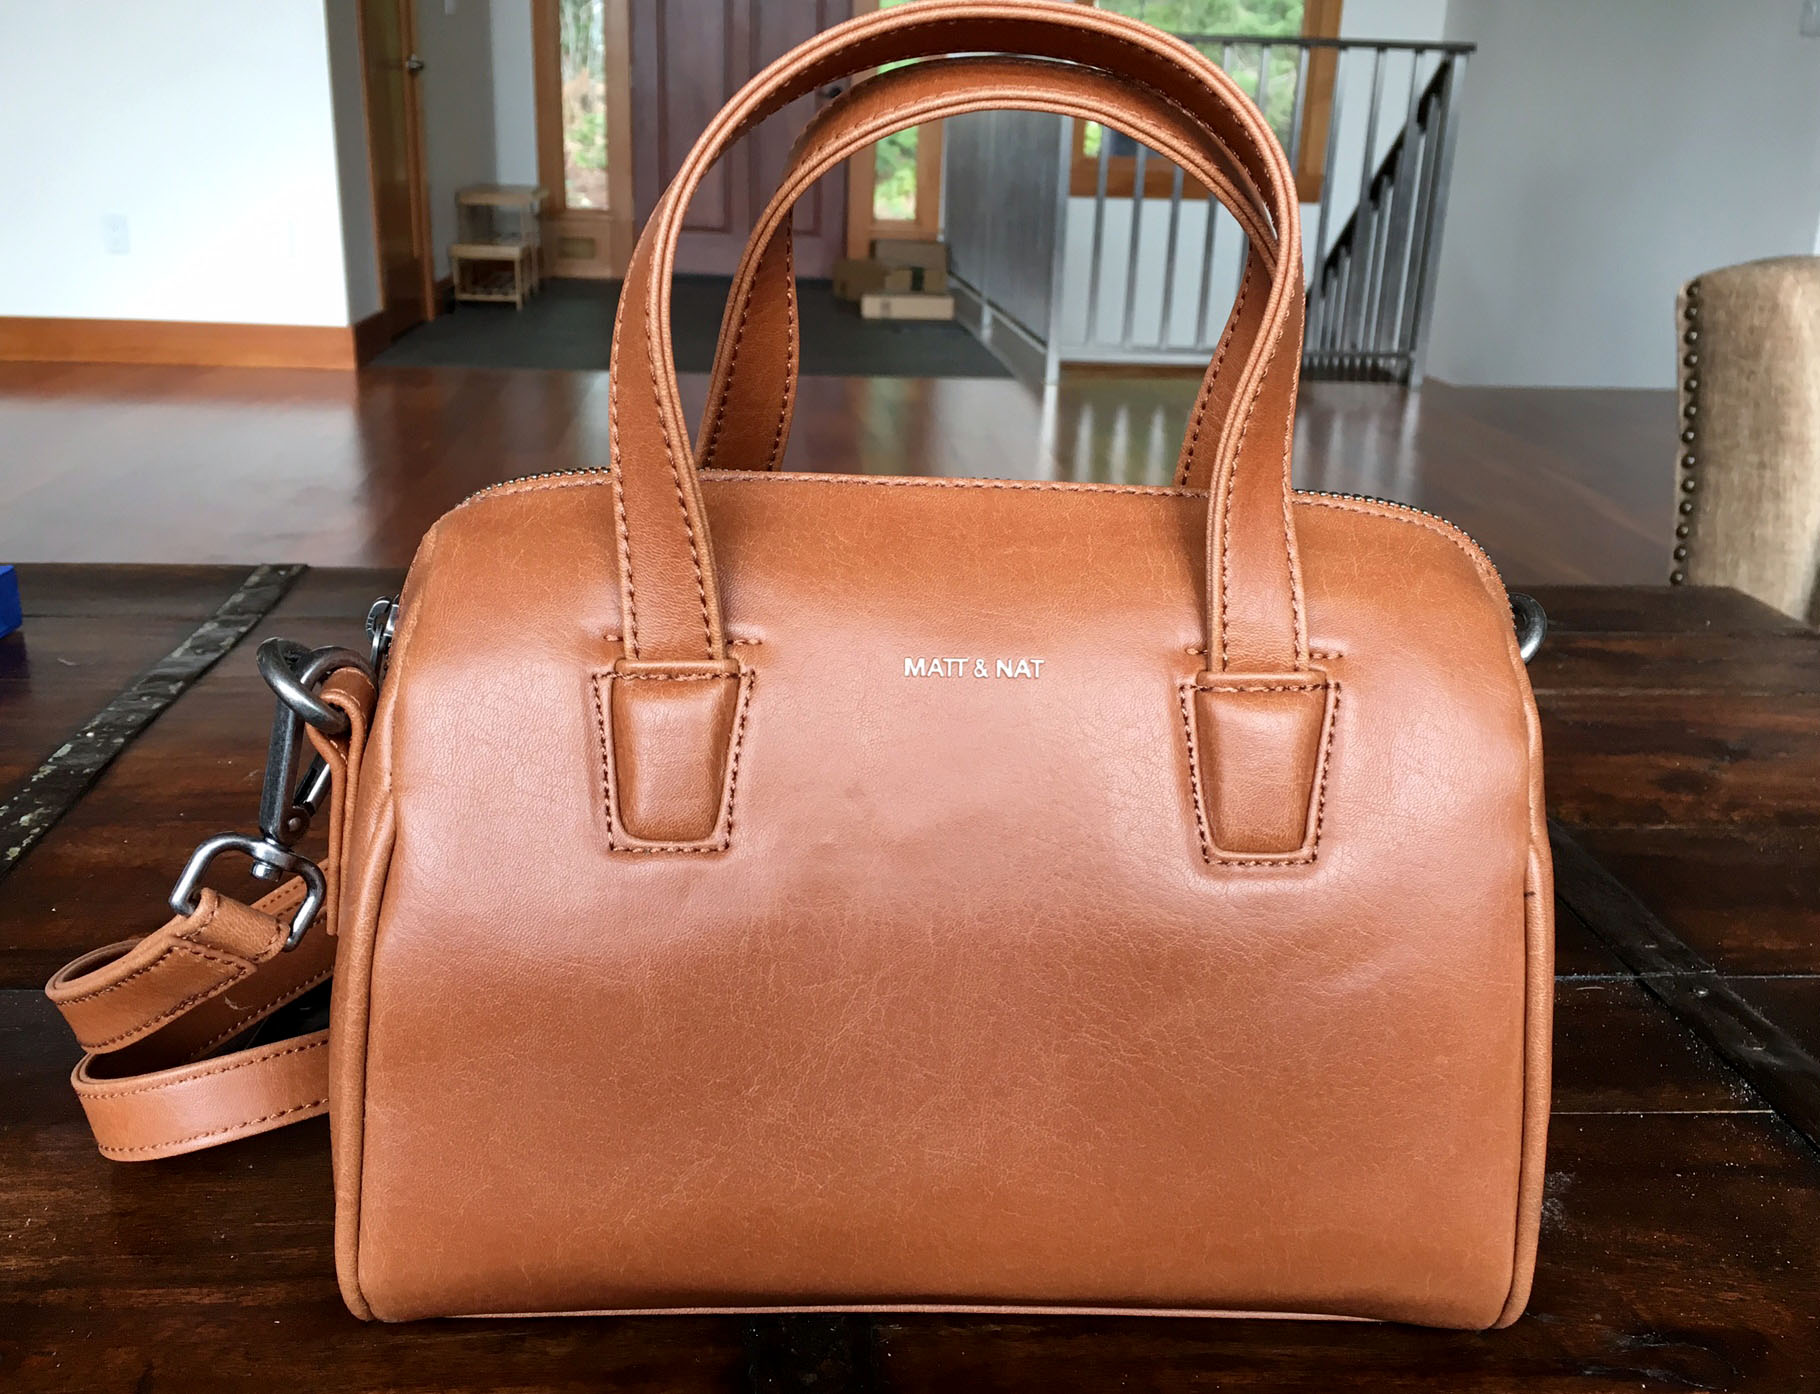 Matt Nat crossbody purse bag red leather | eBay